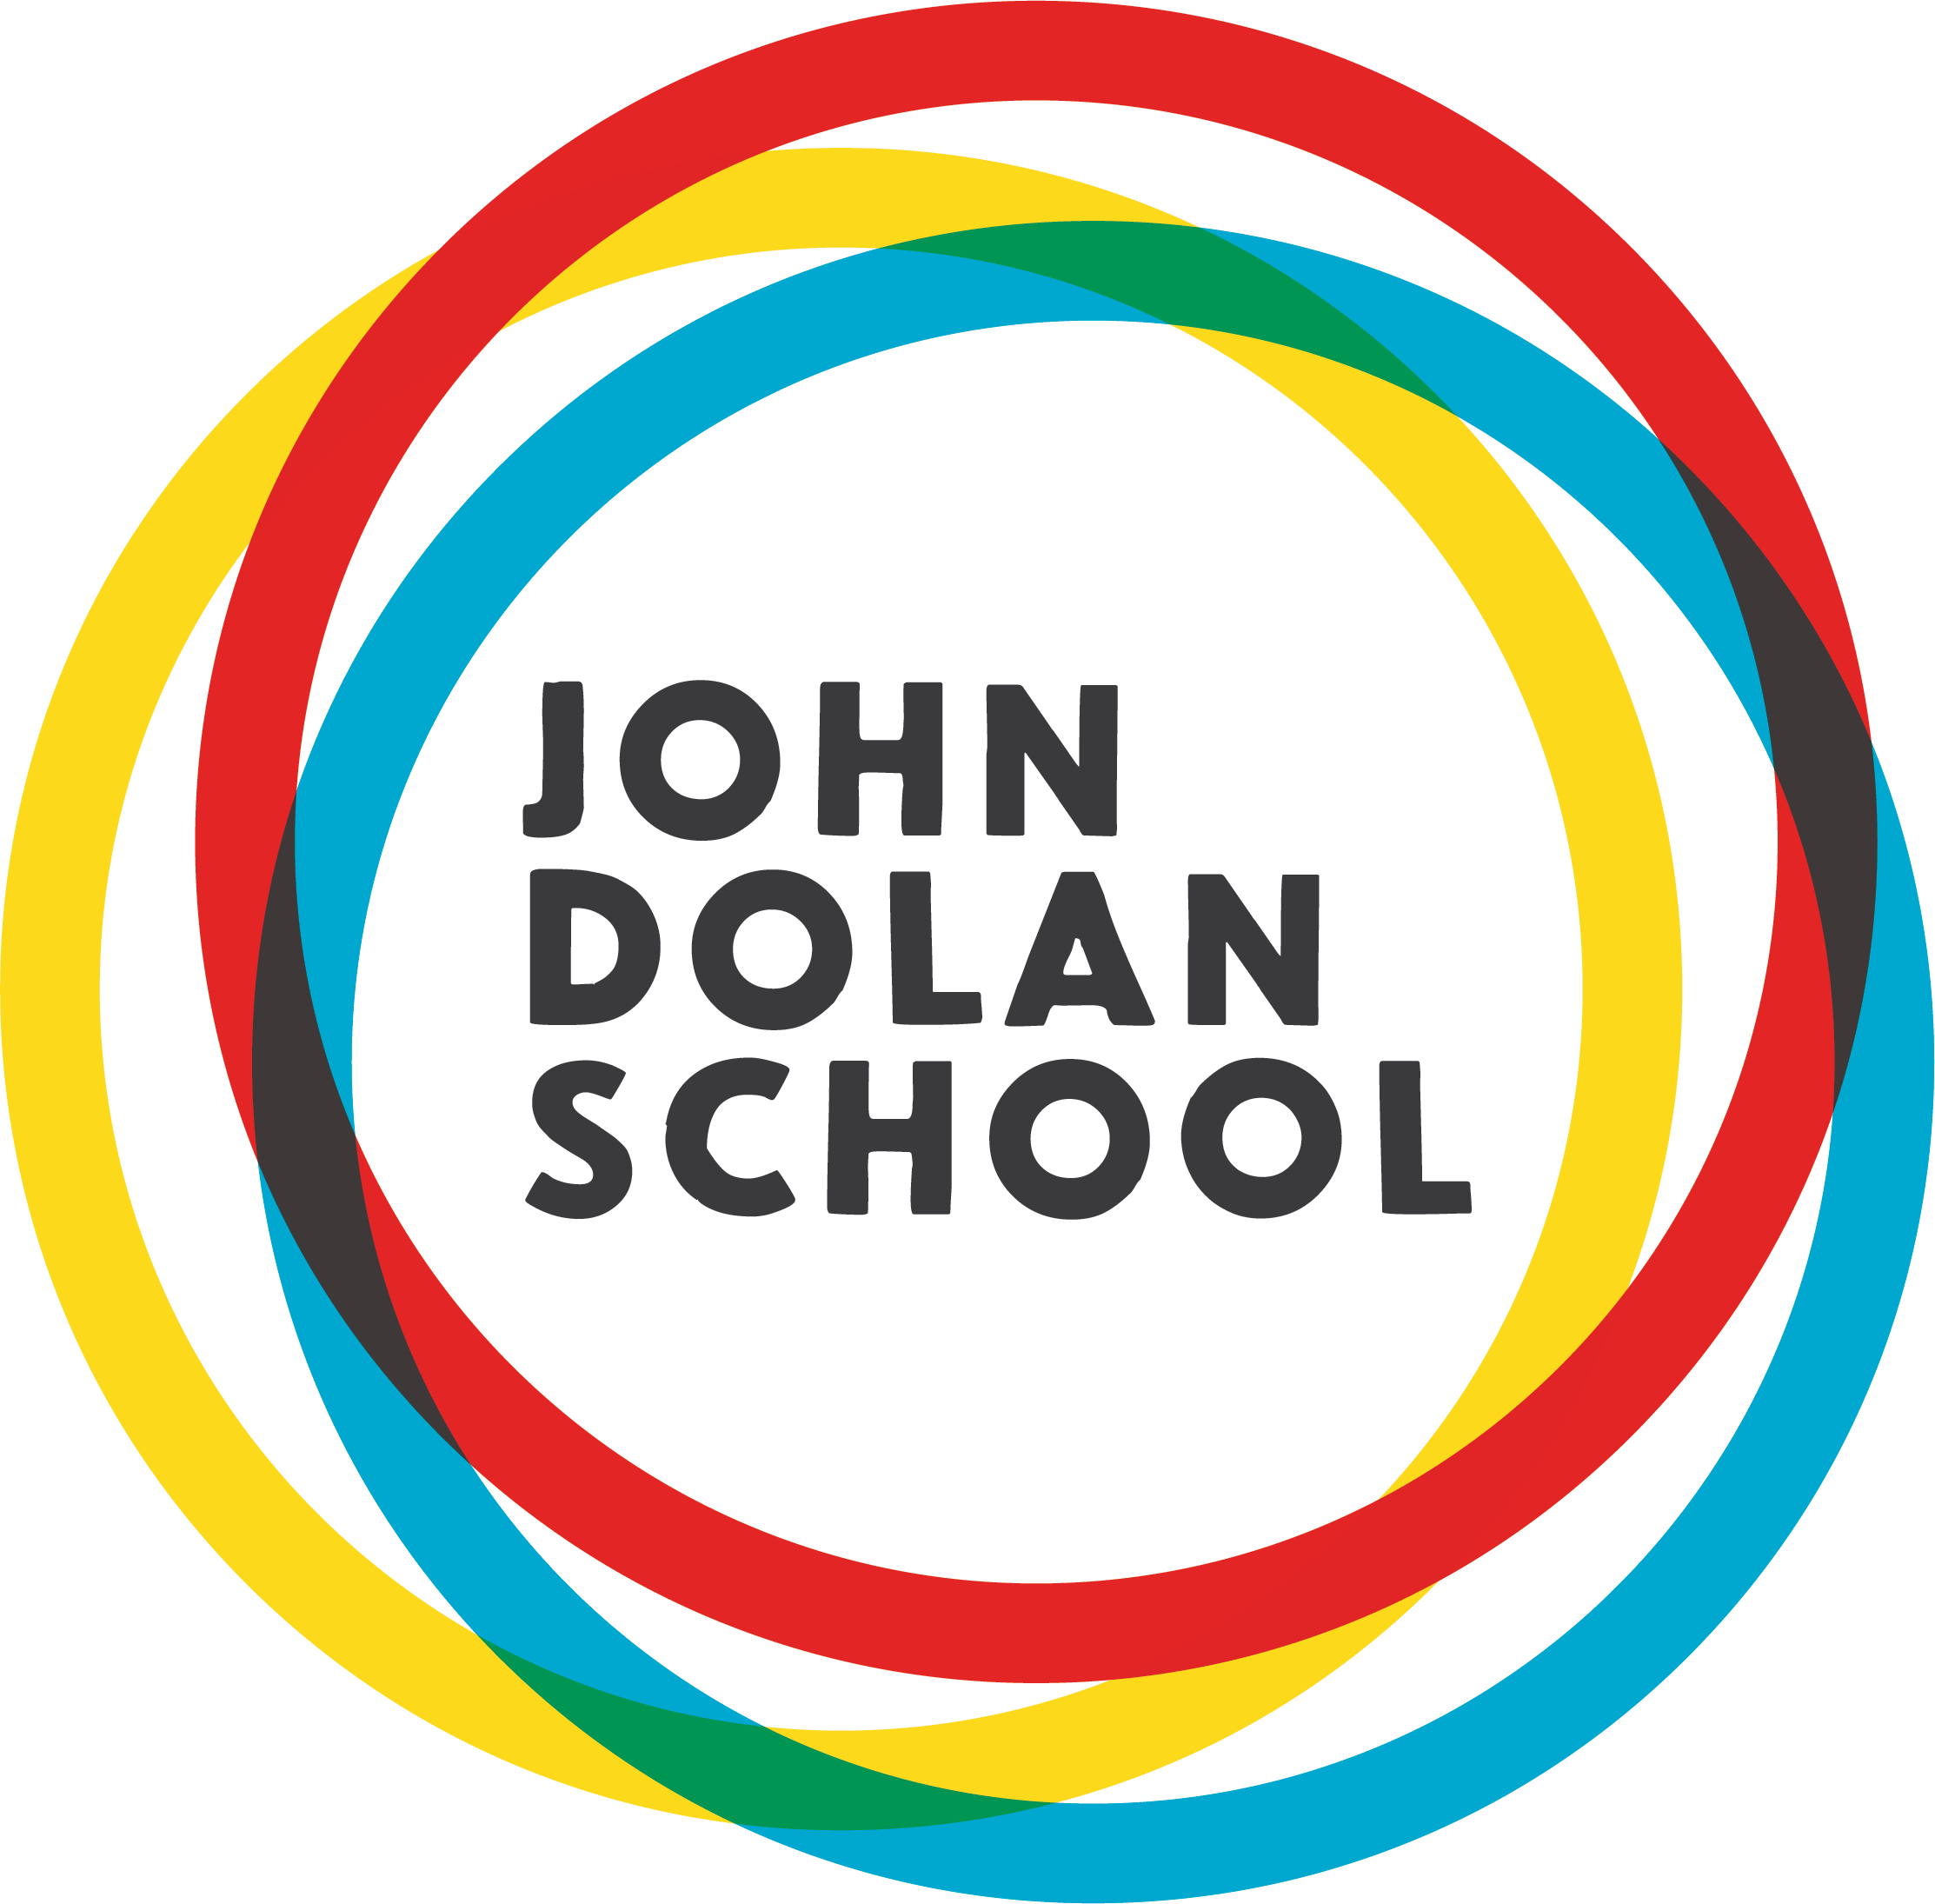 John Dolan School logo